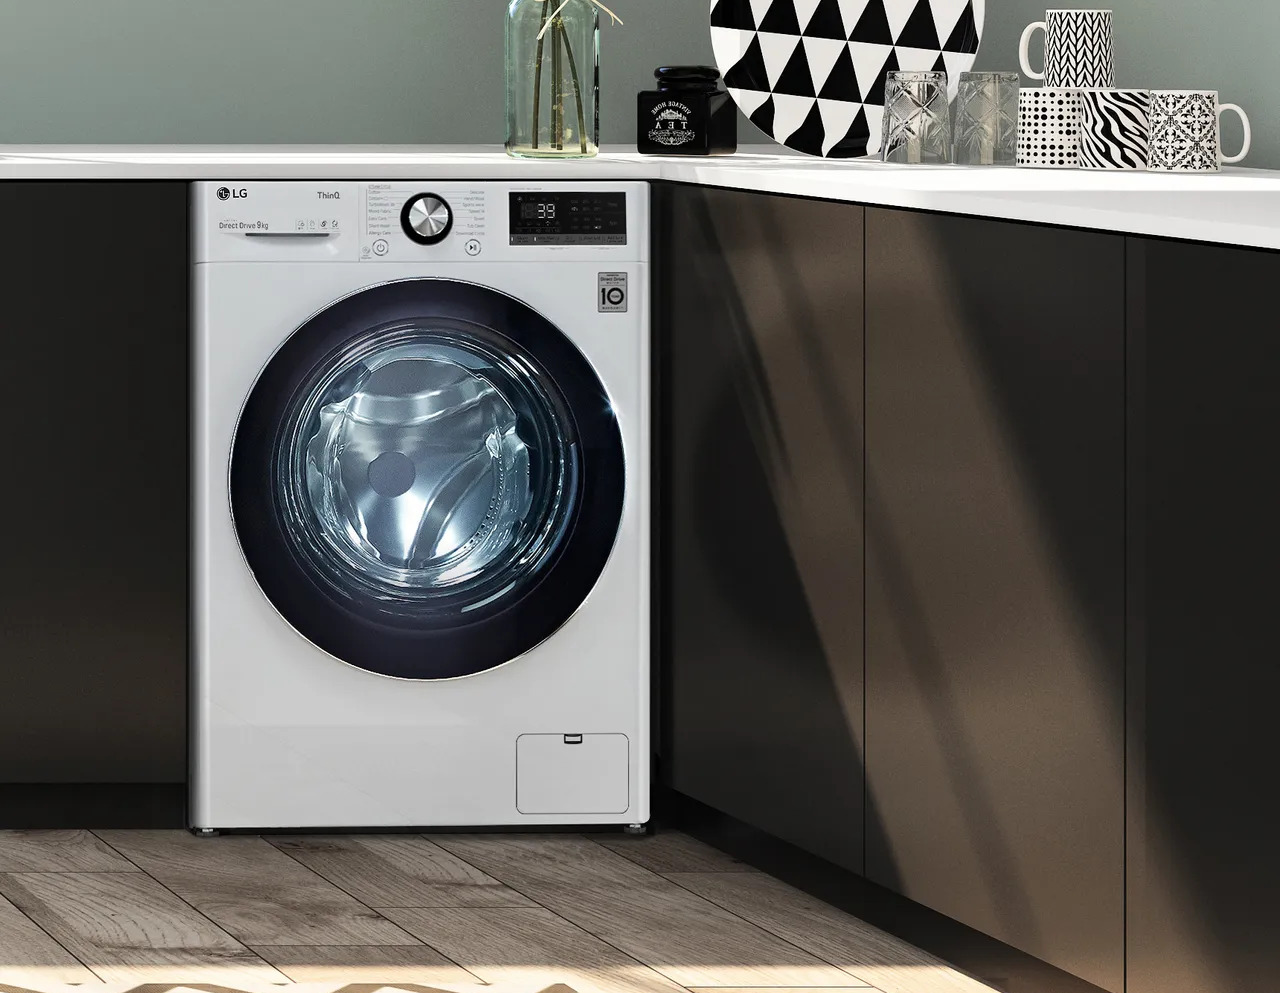 How To Fix The Error Code E3 For LG Washing Machine